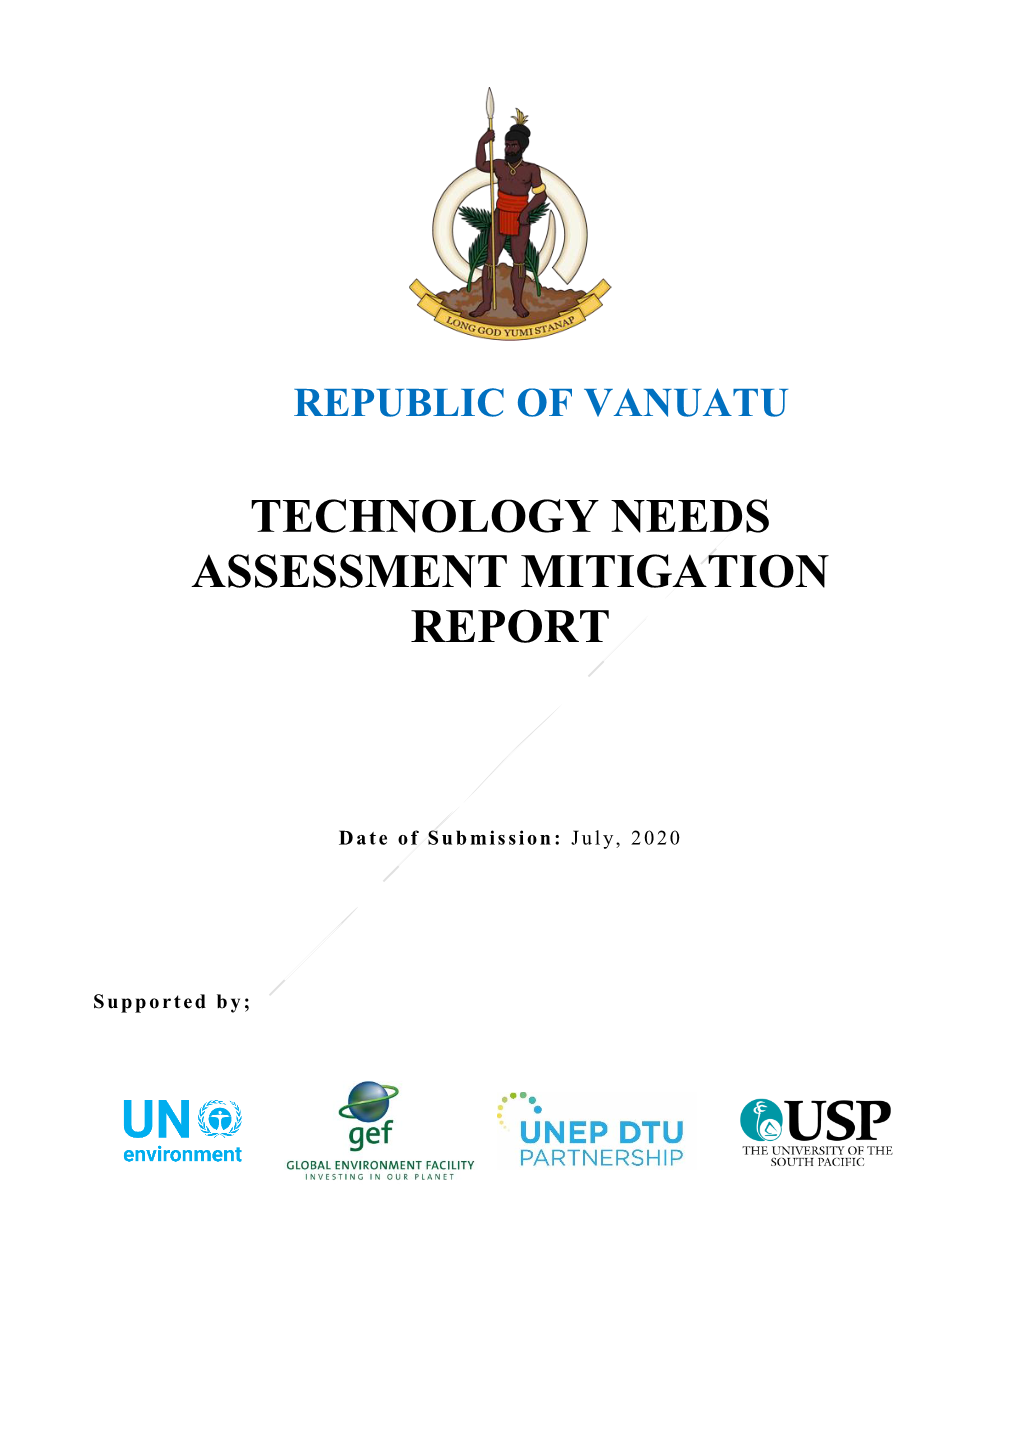 Republic of Vanuatu Technology Needs Assessment Mitigation Report